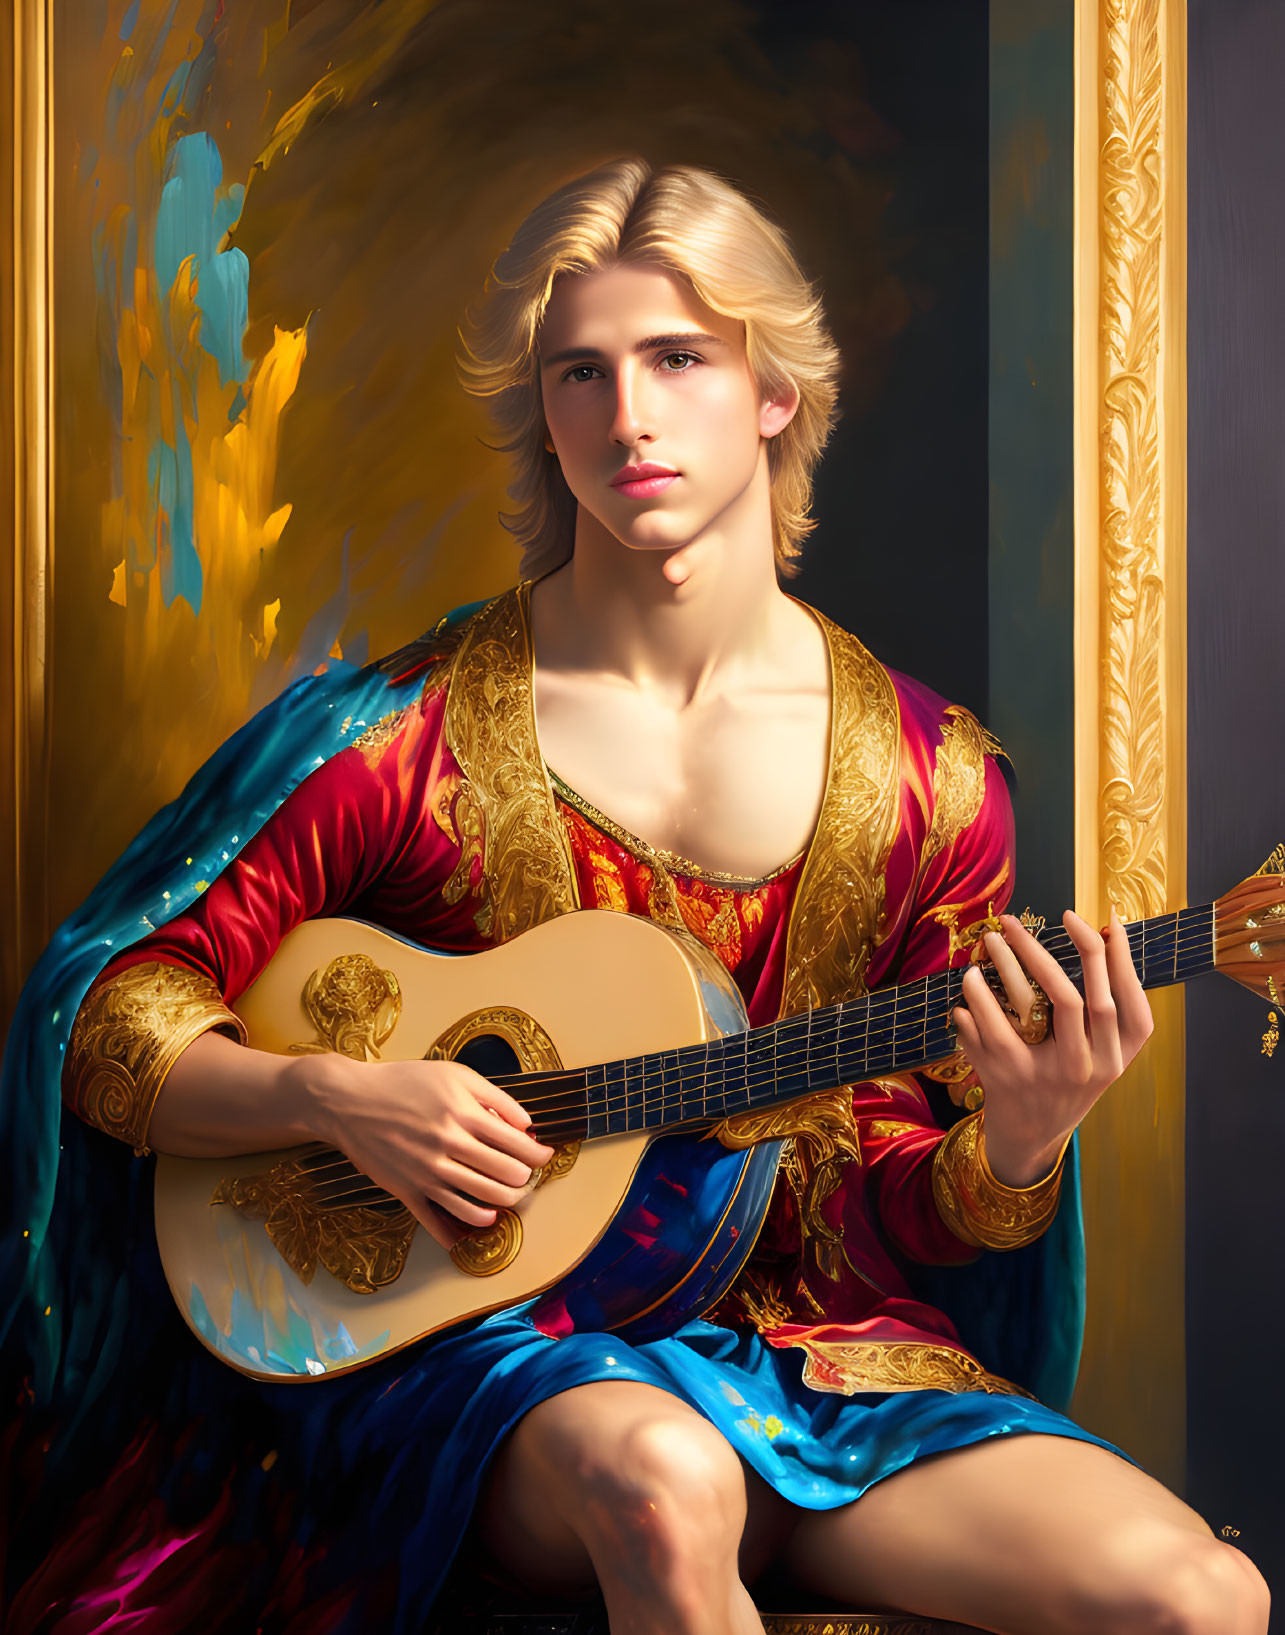 Blonde musician playing guitar in ornate robe